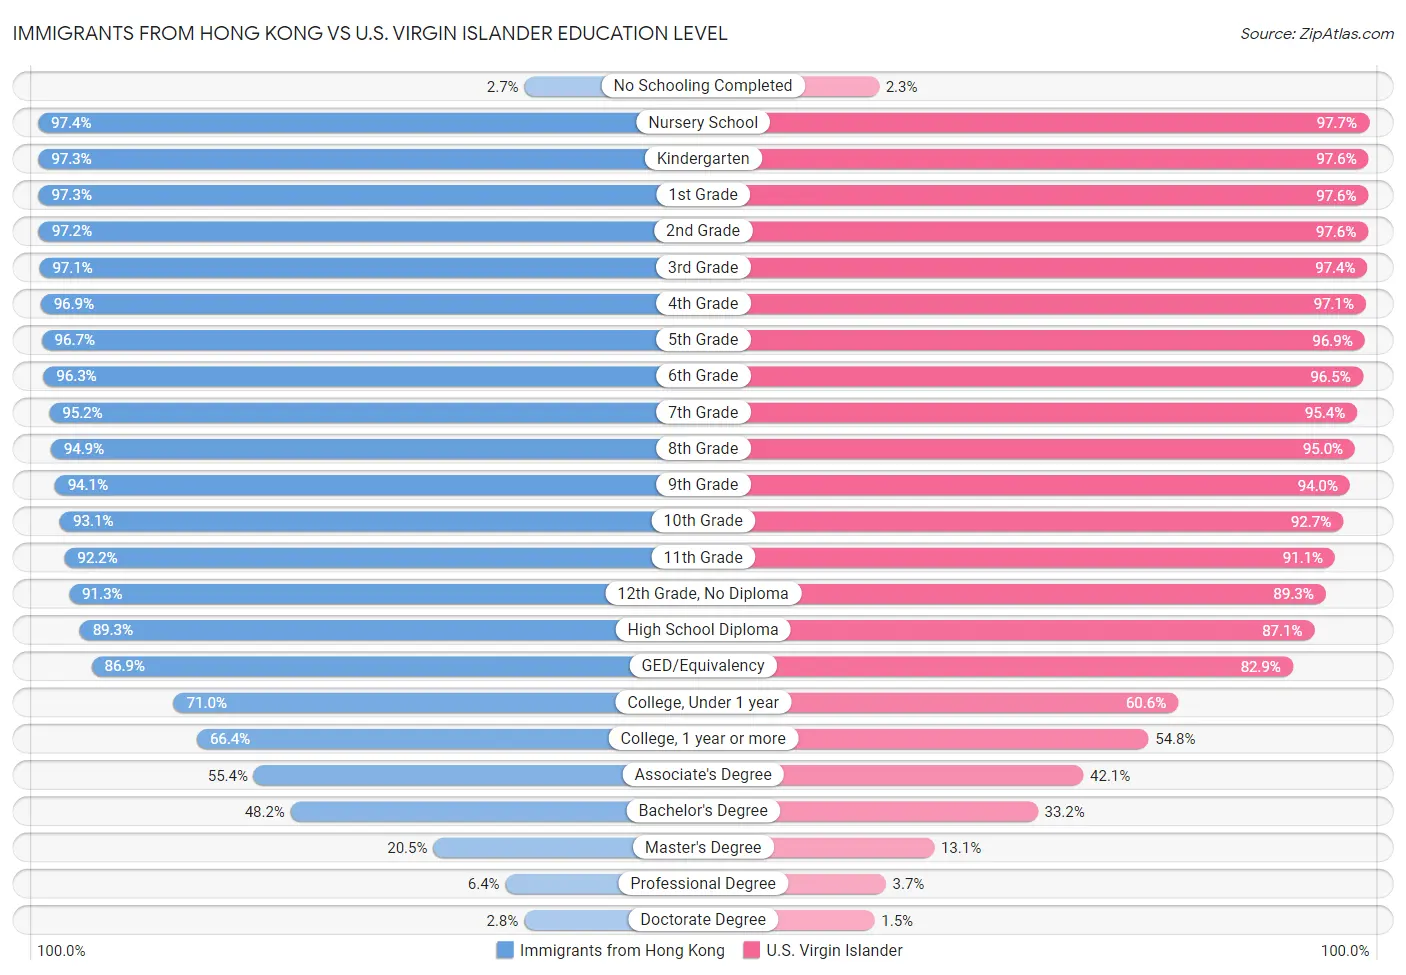 Immigrants from Hong Kong vs U.S. Virgin Islander Education Level